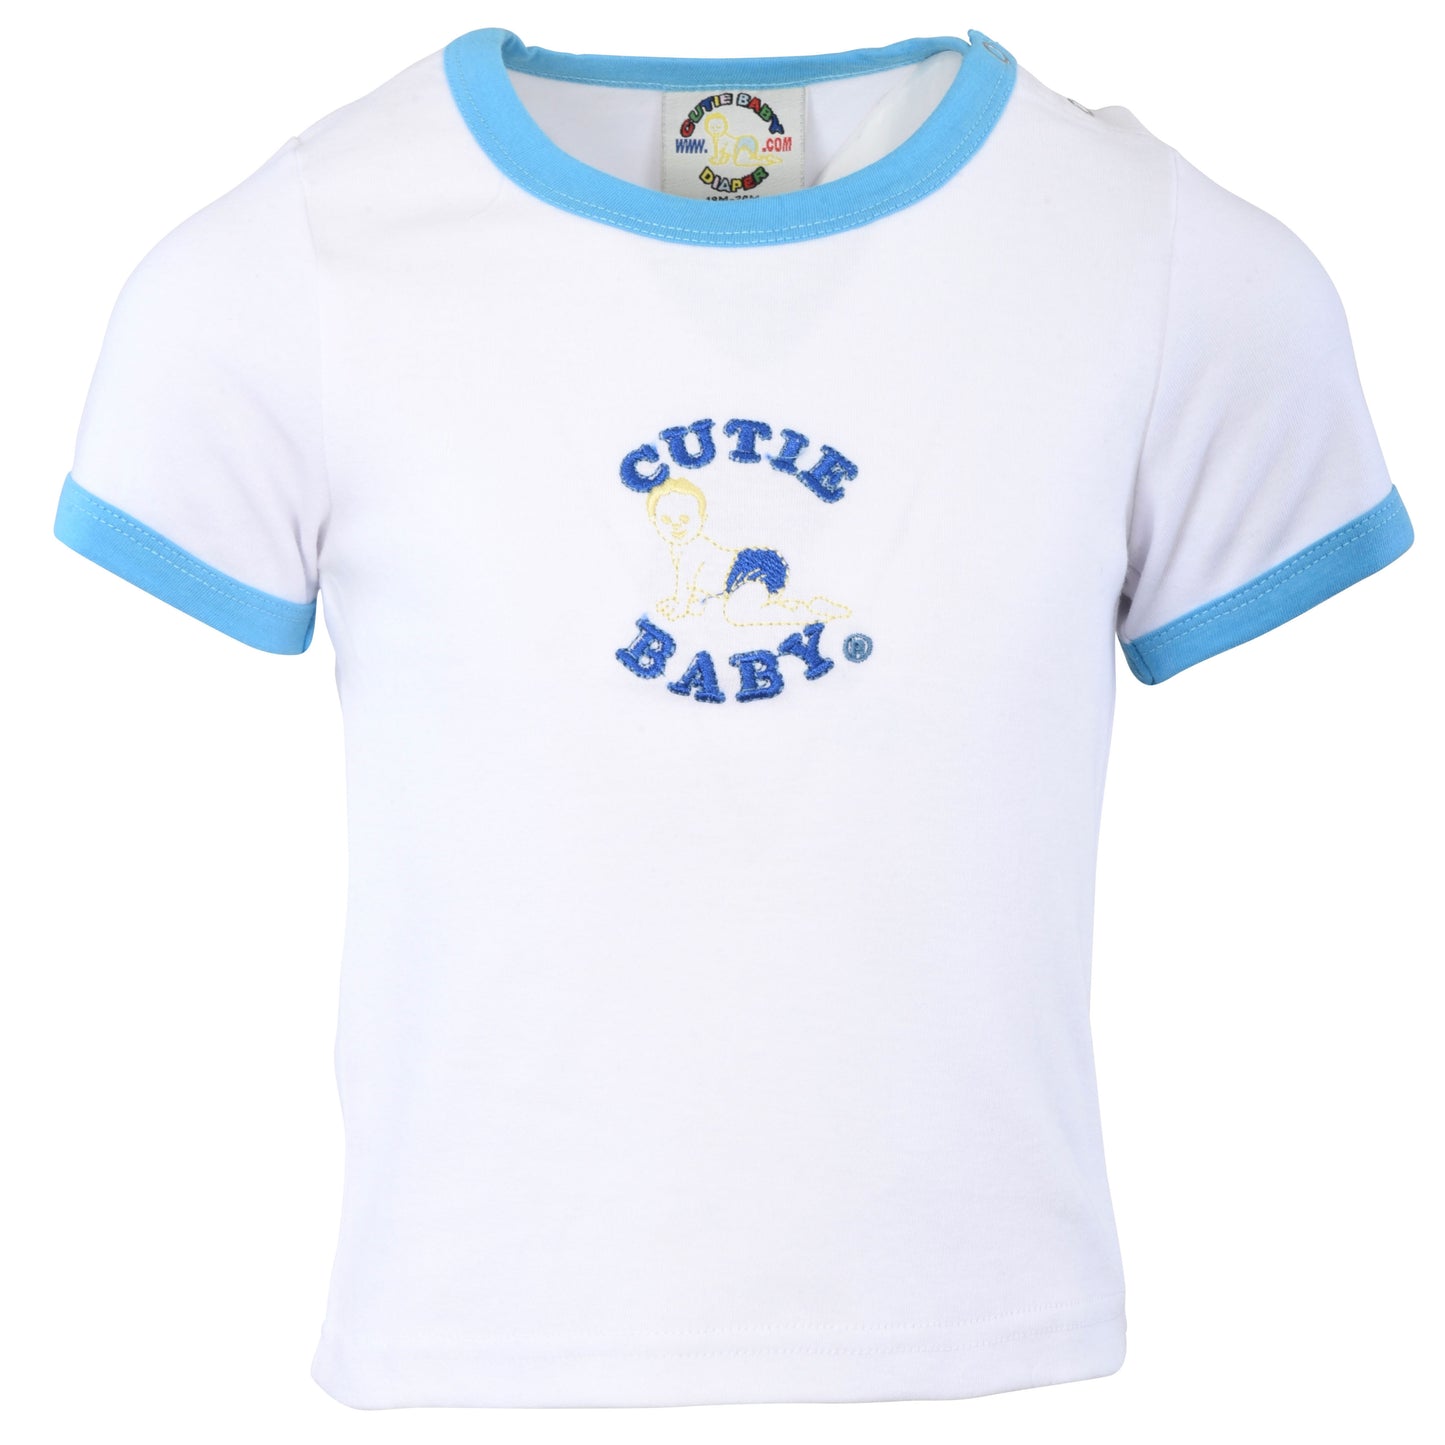 Egyptian Comb Cotton Diaper/T-shirt Combo - Light Blue